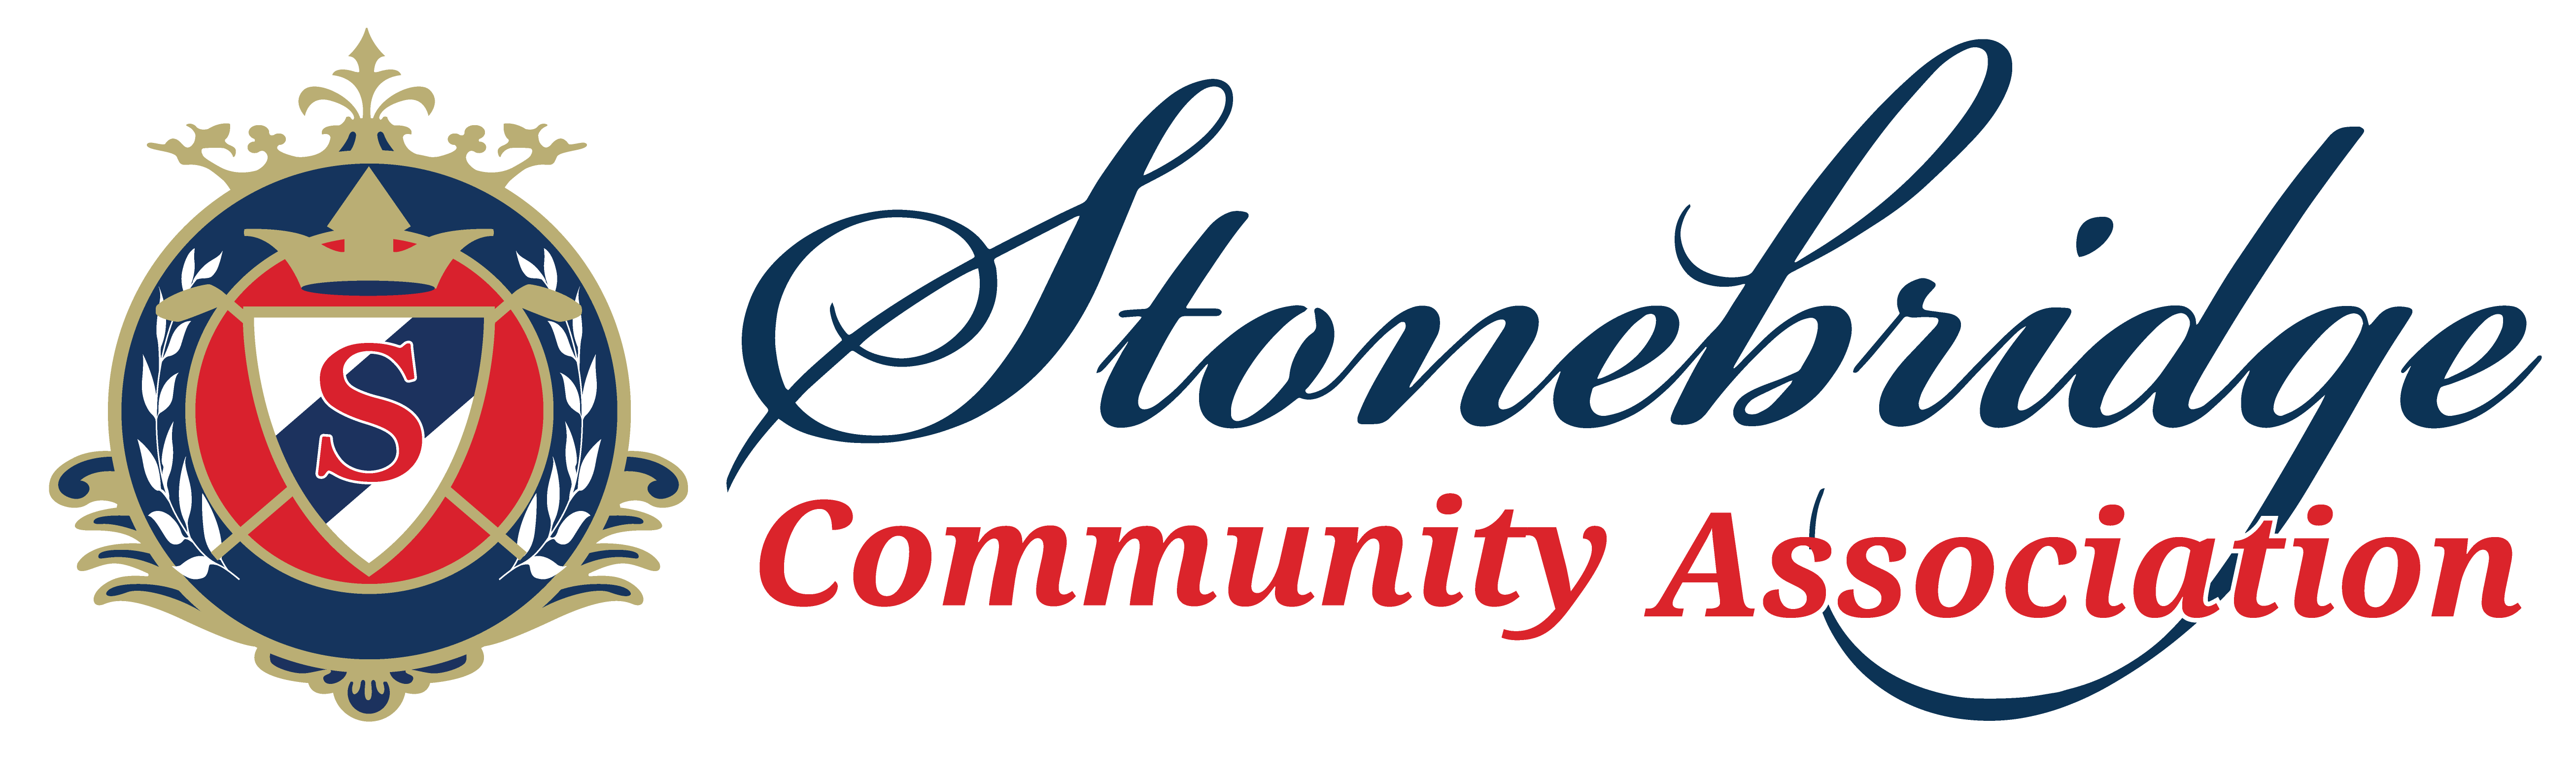 Stonebridge Community Association